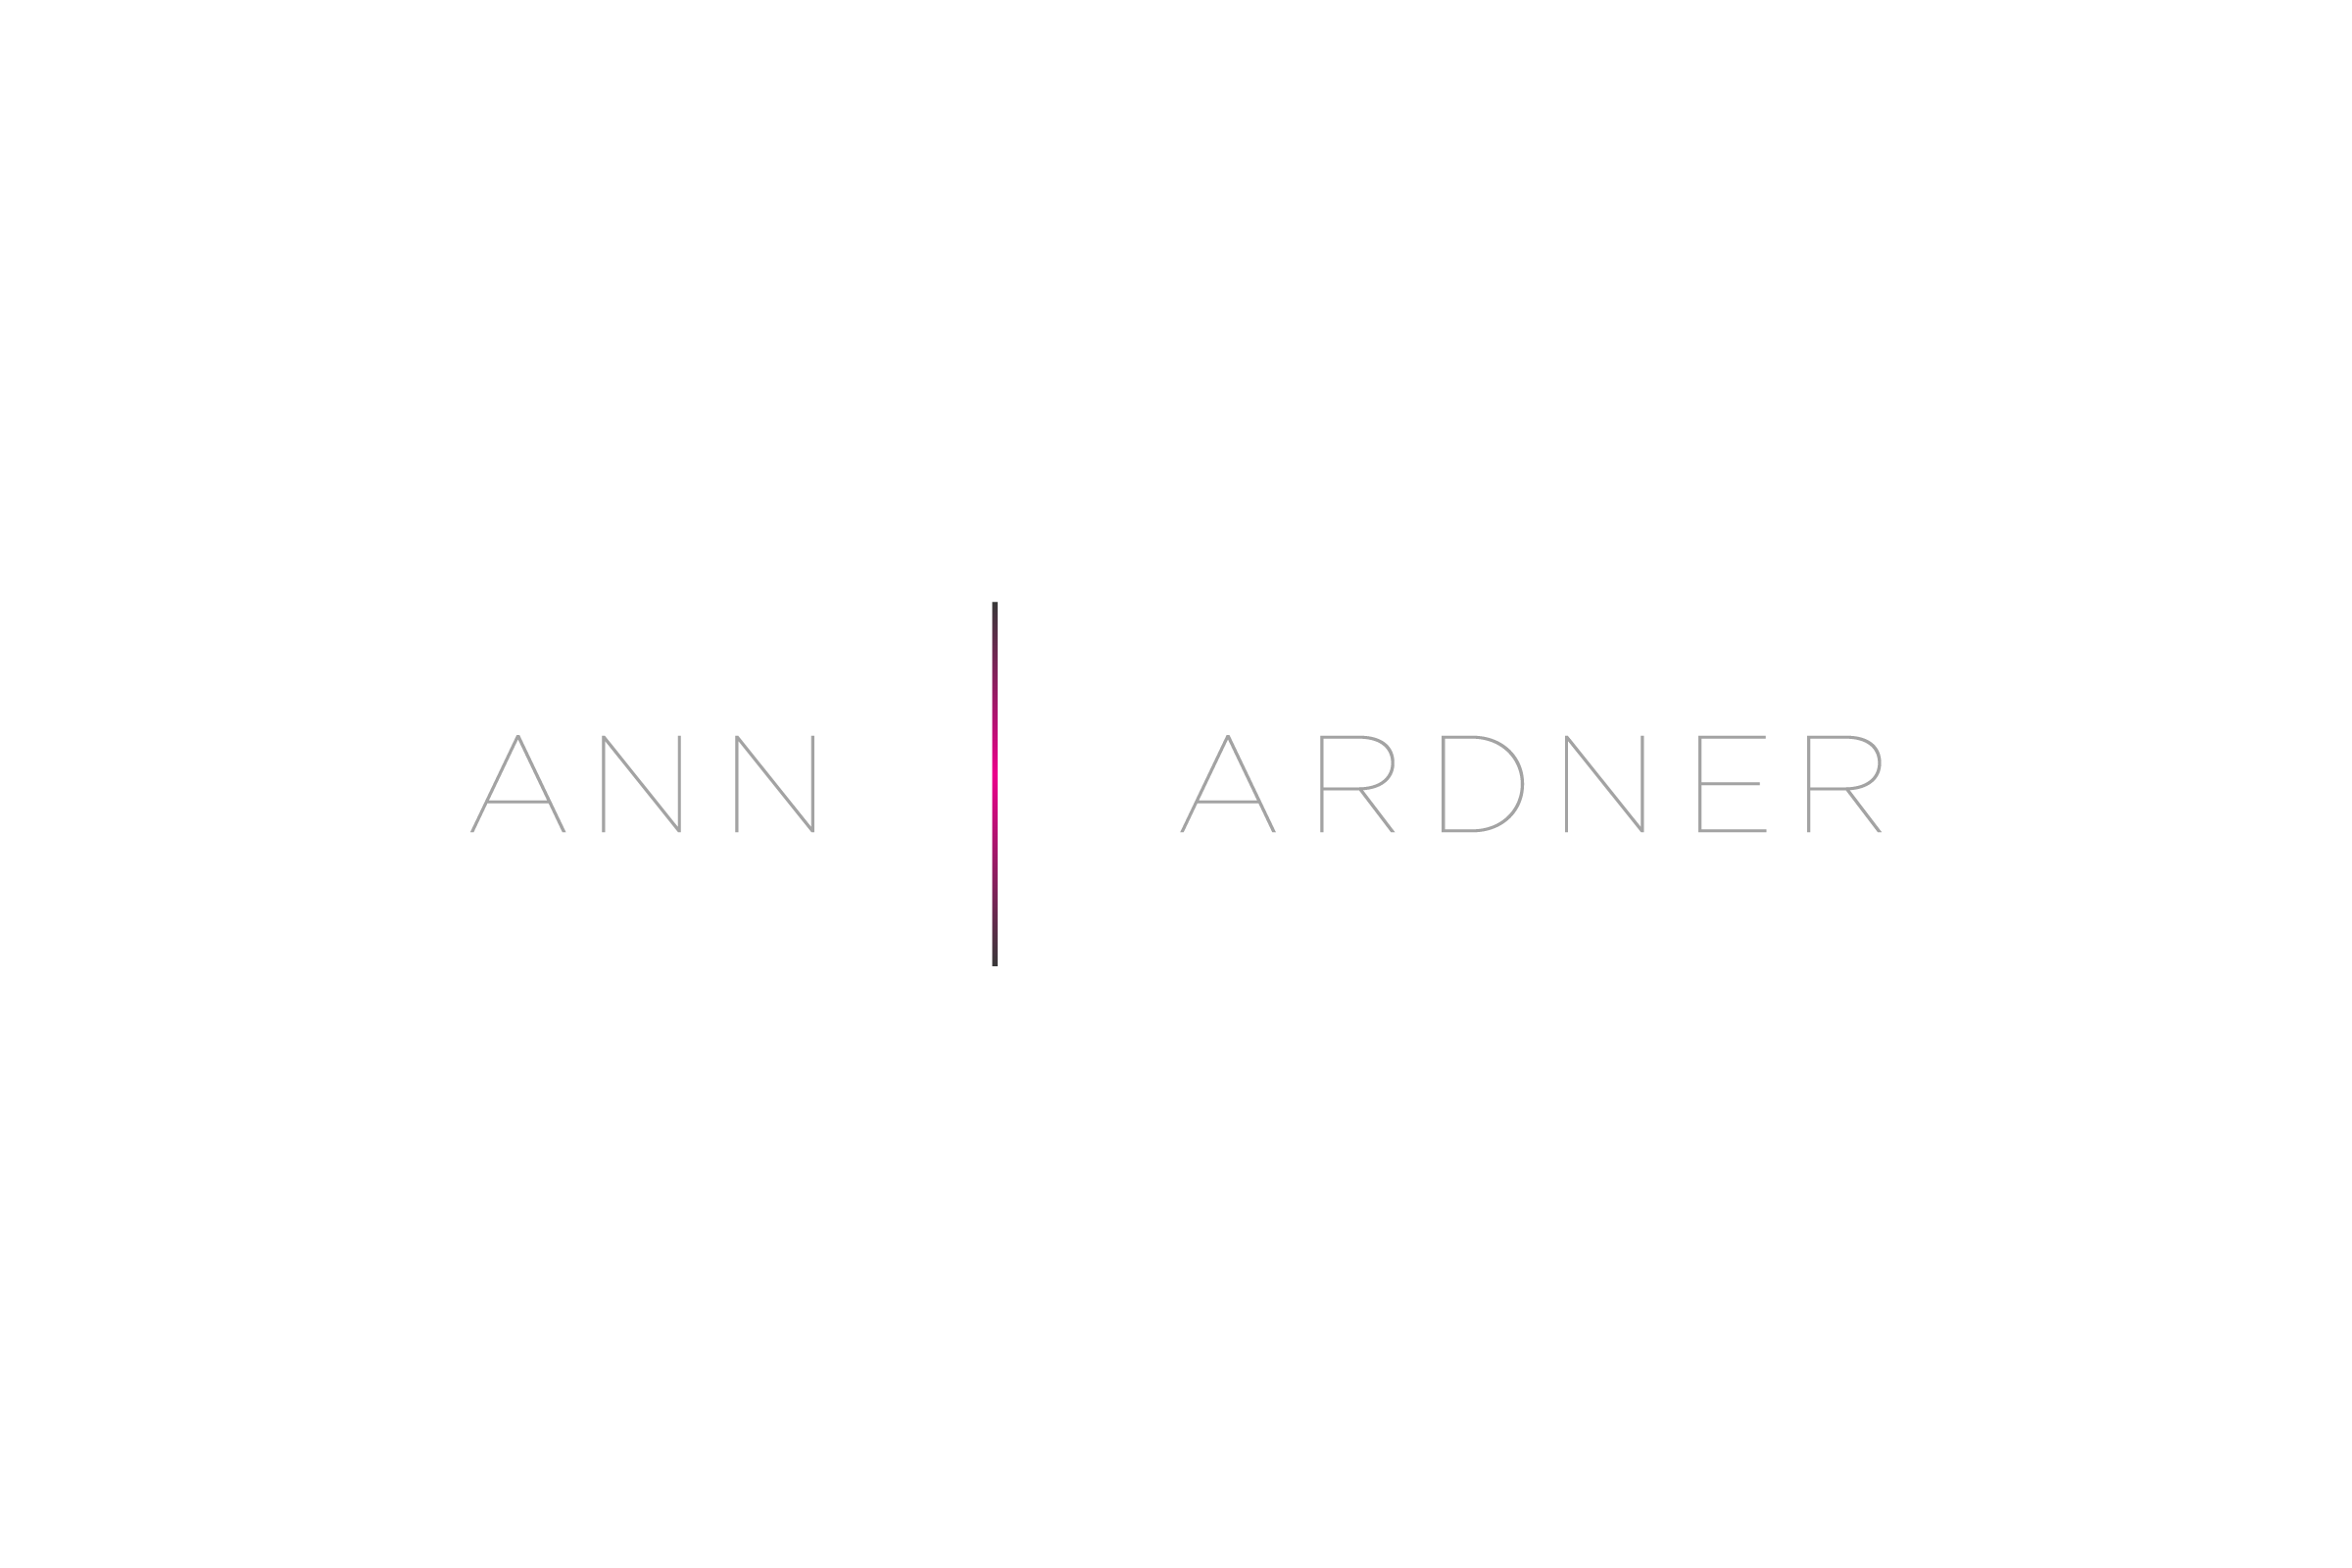 Anna Gardner branding by Peek Creative Limited